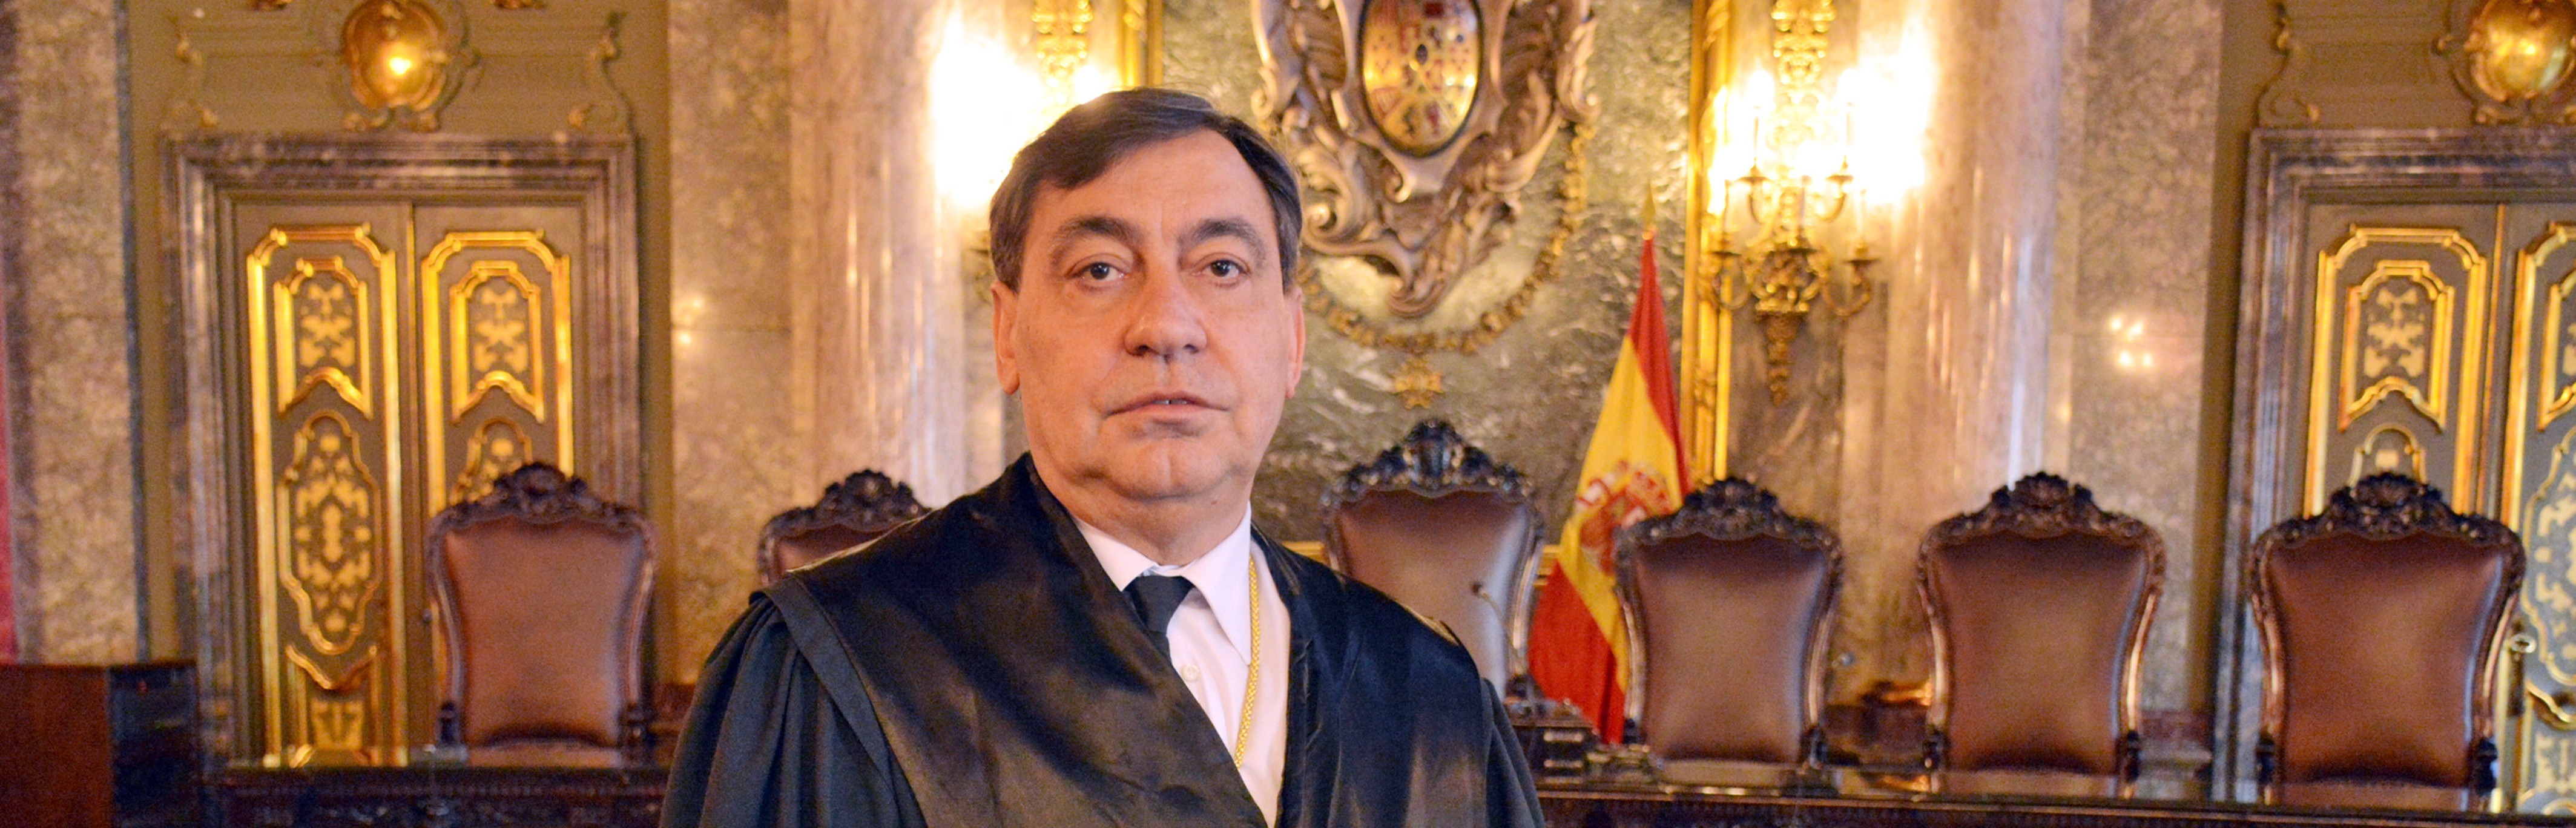 The new Attorney General, Julián Sánchez Melgar (by CGPJ)